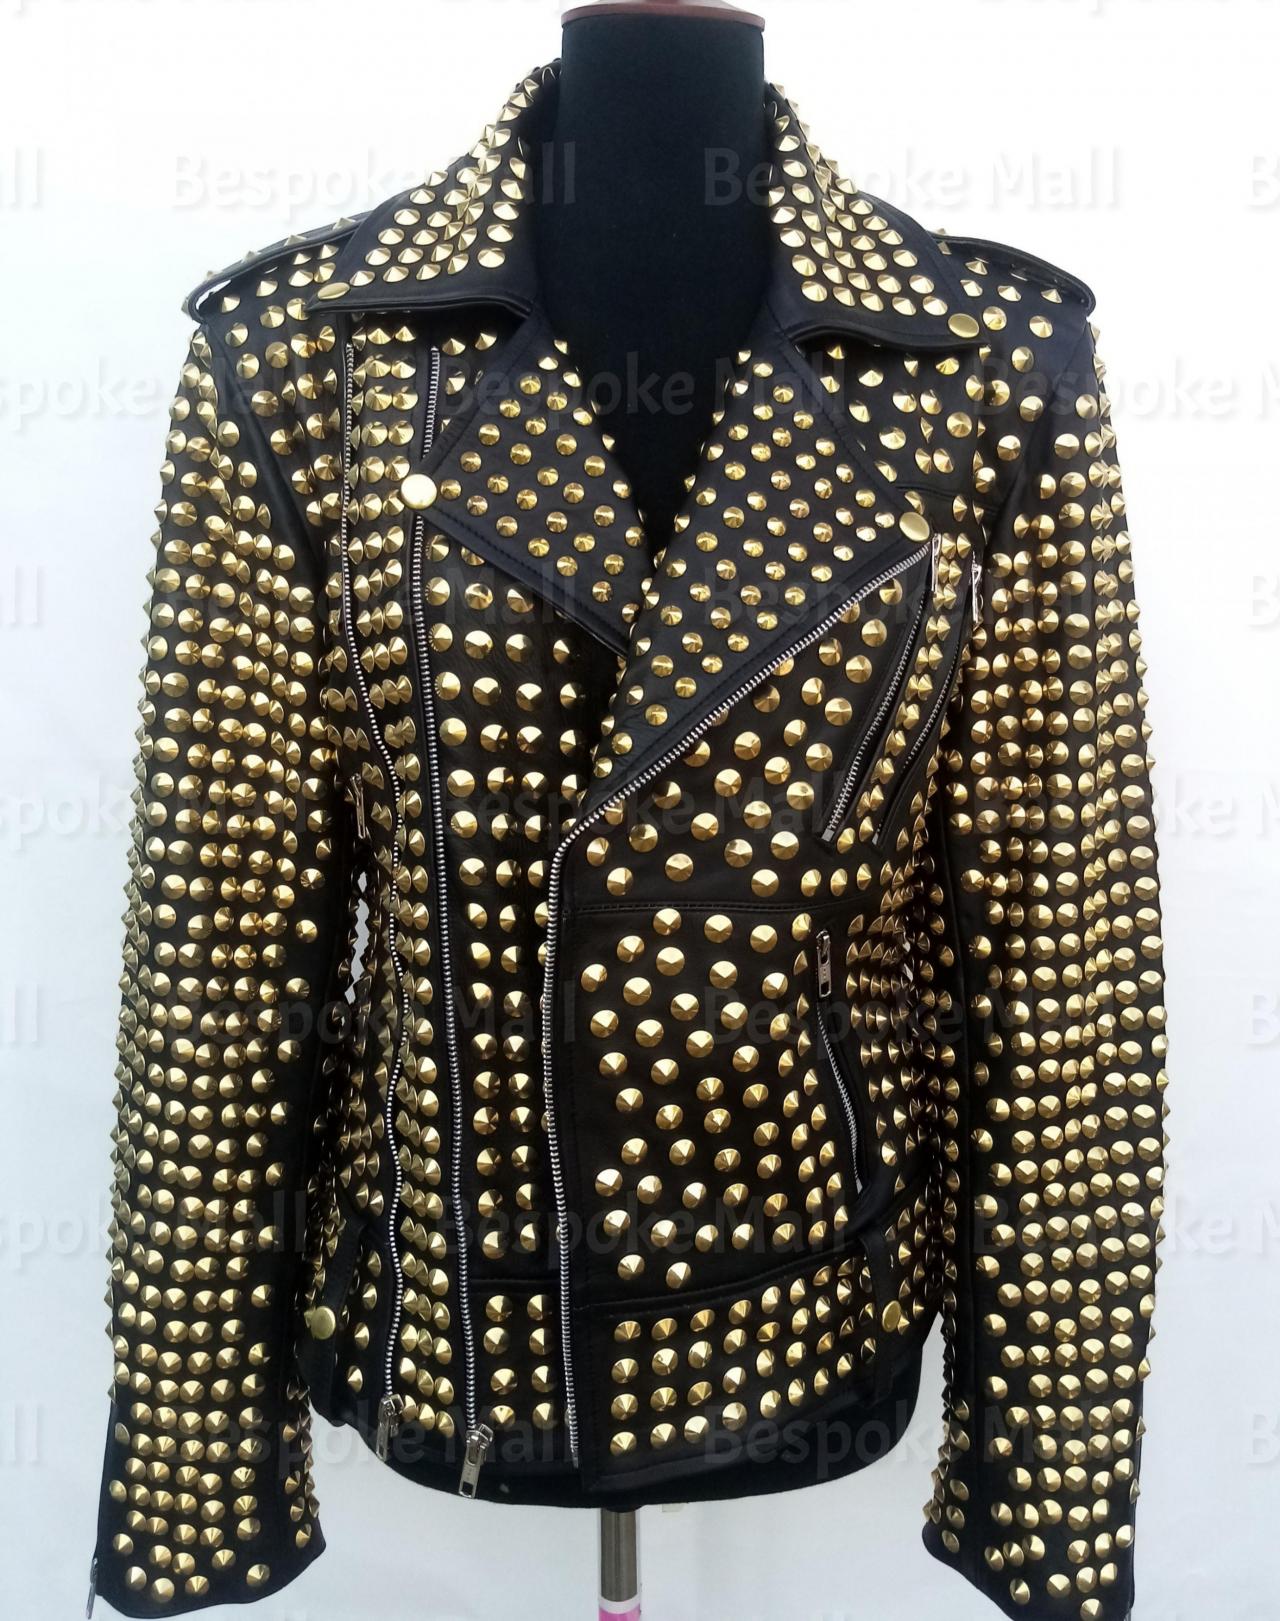 New Handmade Women Punk Black Full Golden Studded Brando Style Steam Punk Studded Biker Zipper Cowhide Leather Jacket-12